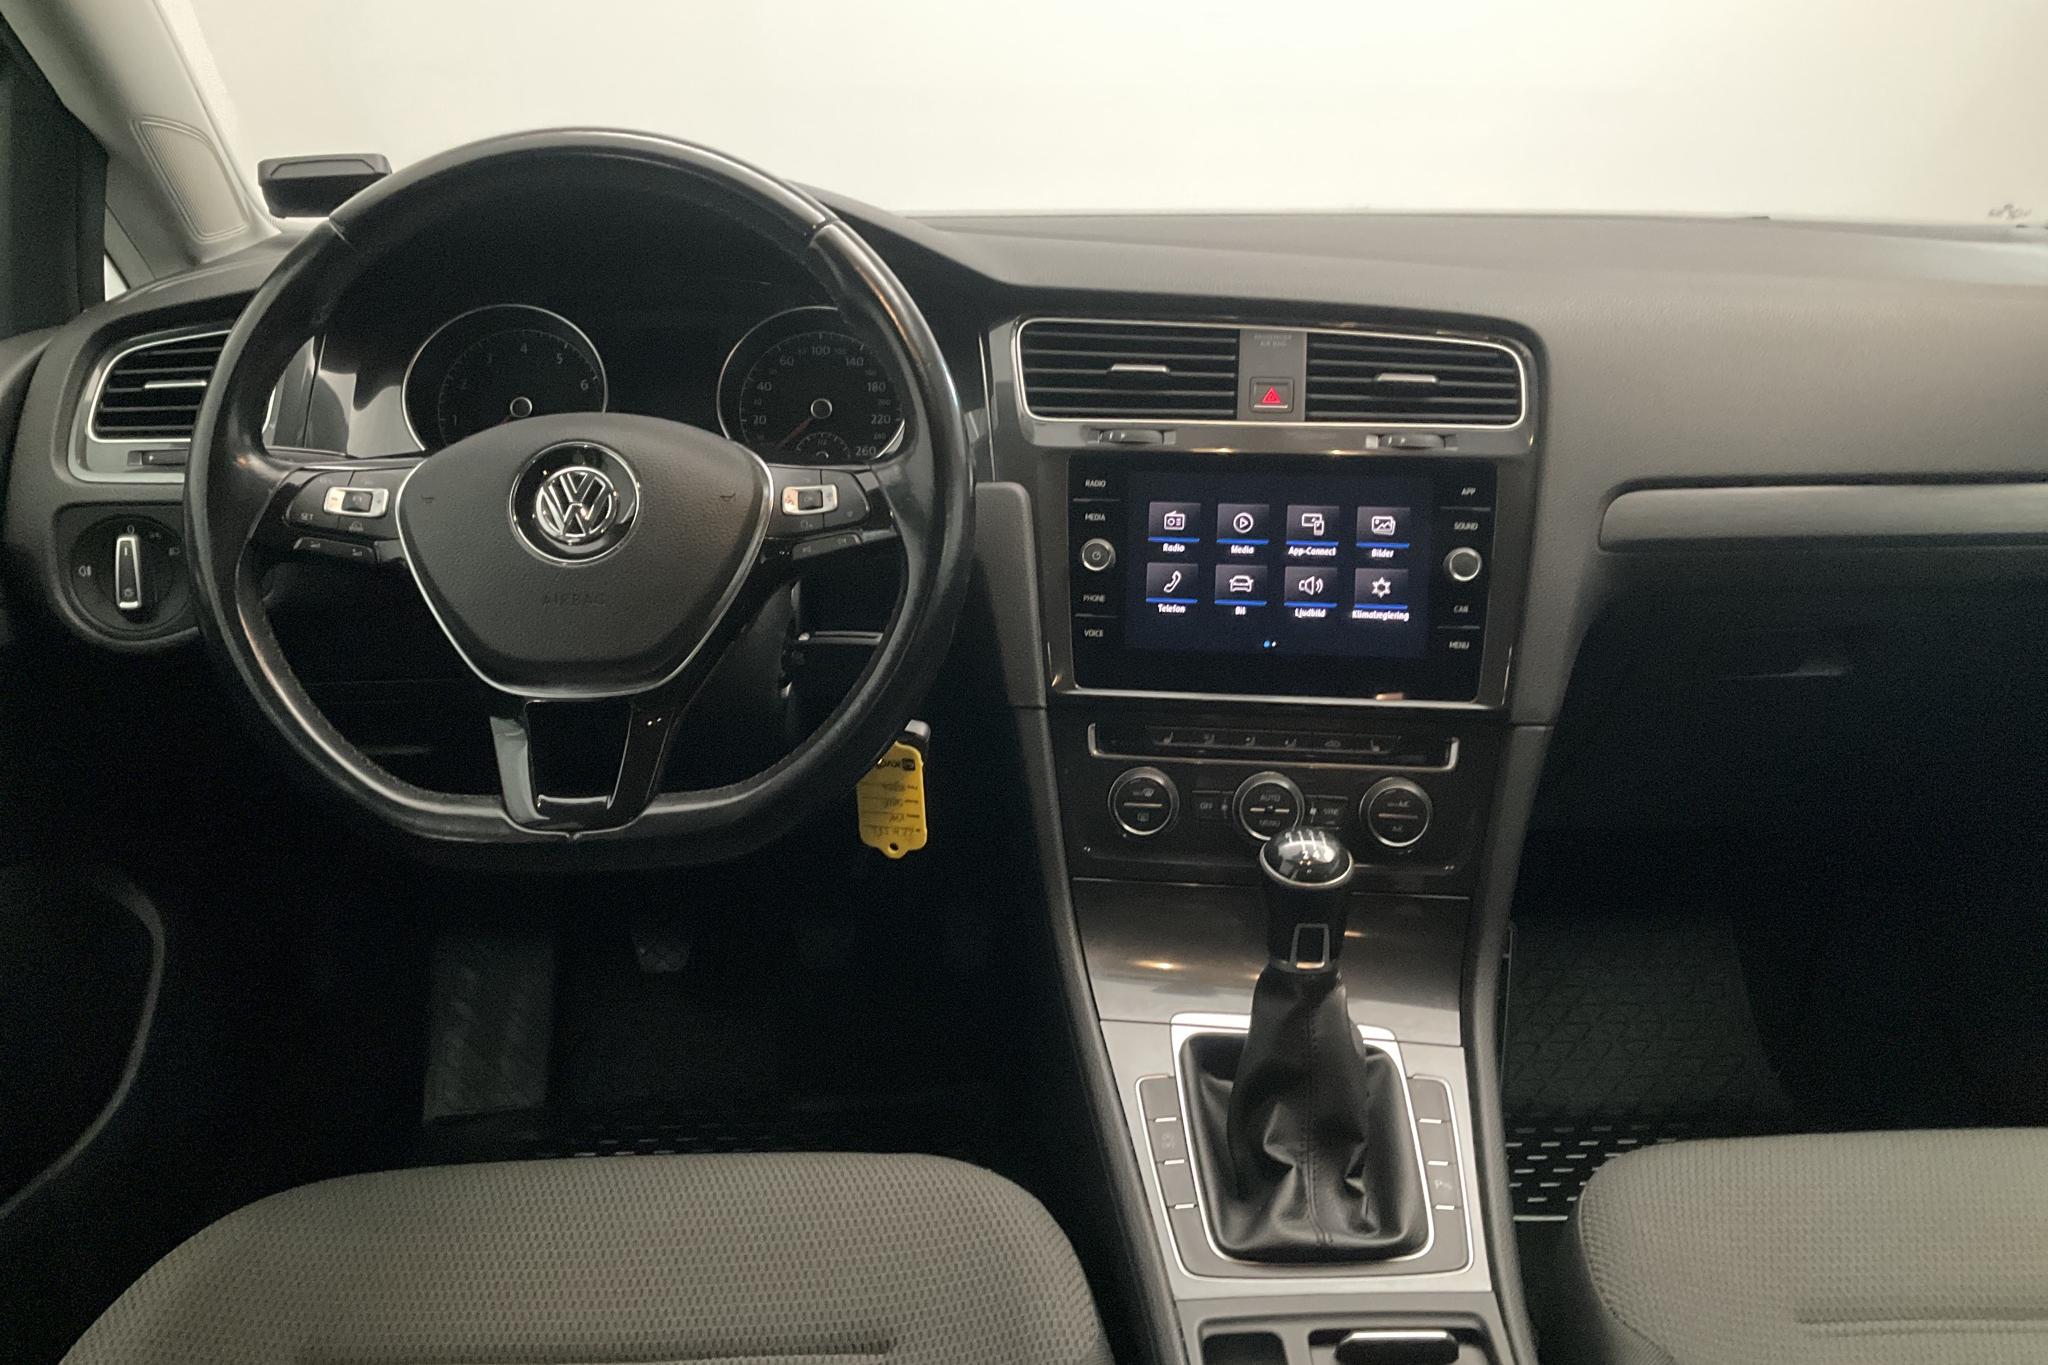 VW Golf VII 1.4 TSI Multifuel 5dr (125hk) - 106 570 km - Manual - Dark Grey - 2018